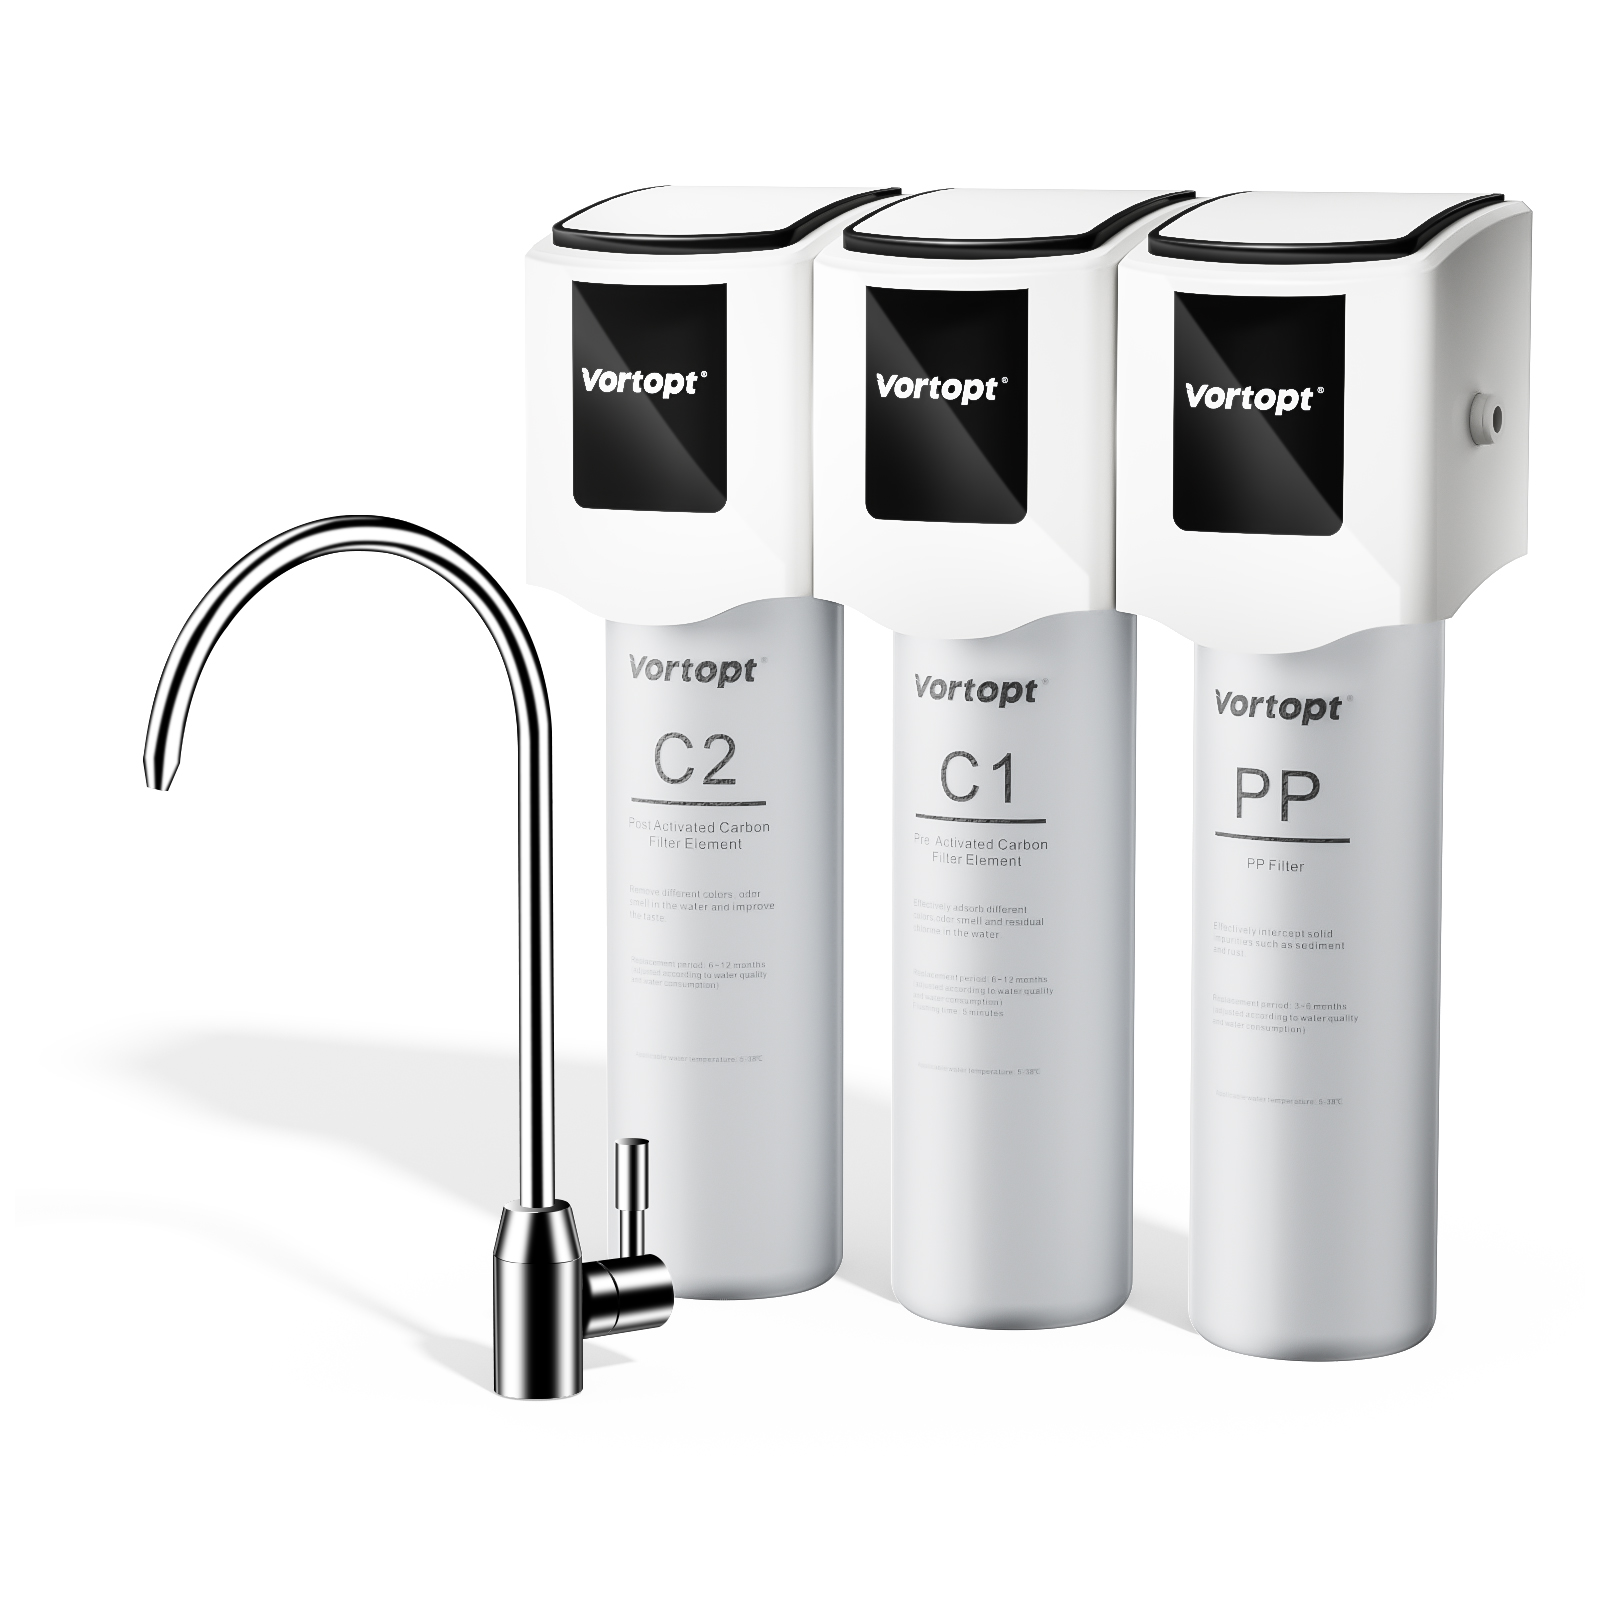 F01 Under Sink Water Filter System - 3-stage Filtration System with 304 Stainless Steel Faucet, Odor & Bad Taste,Vortopt 